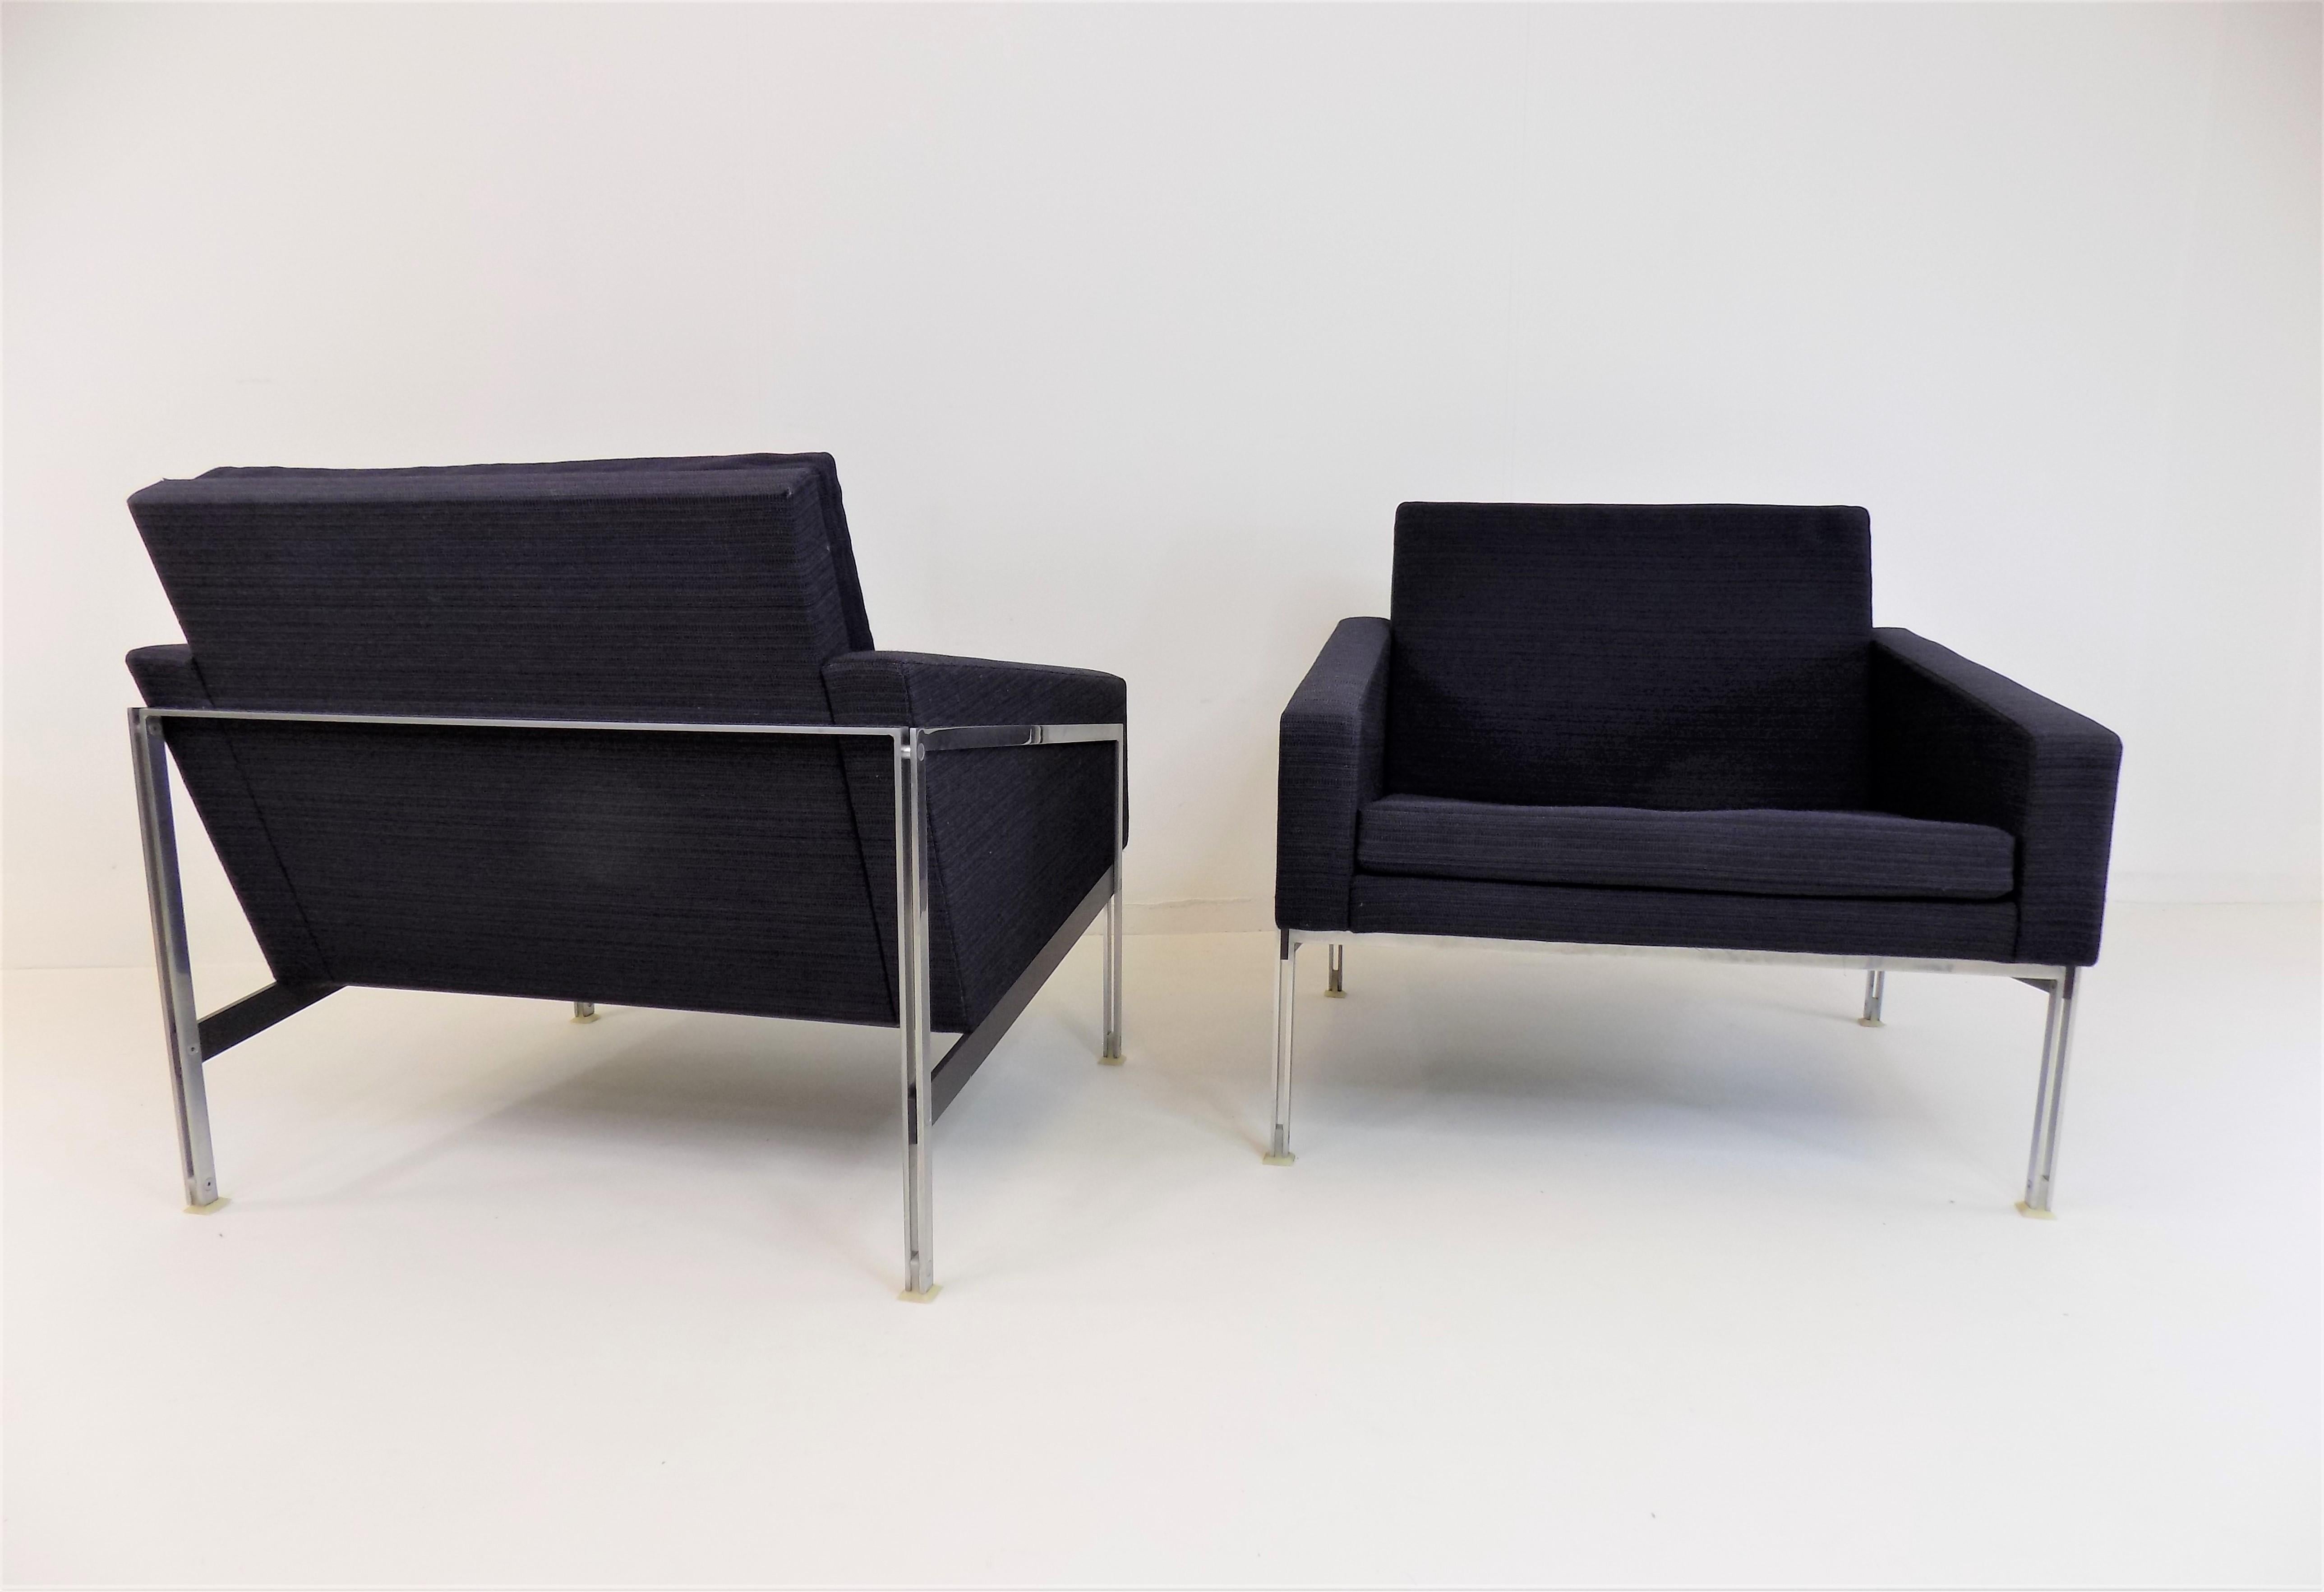 Fabric Lübke Seating Group by Wolfgang Herren